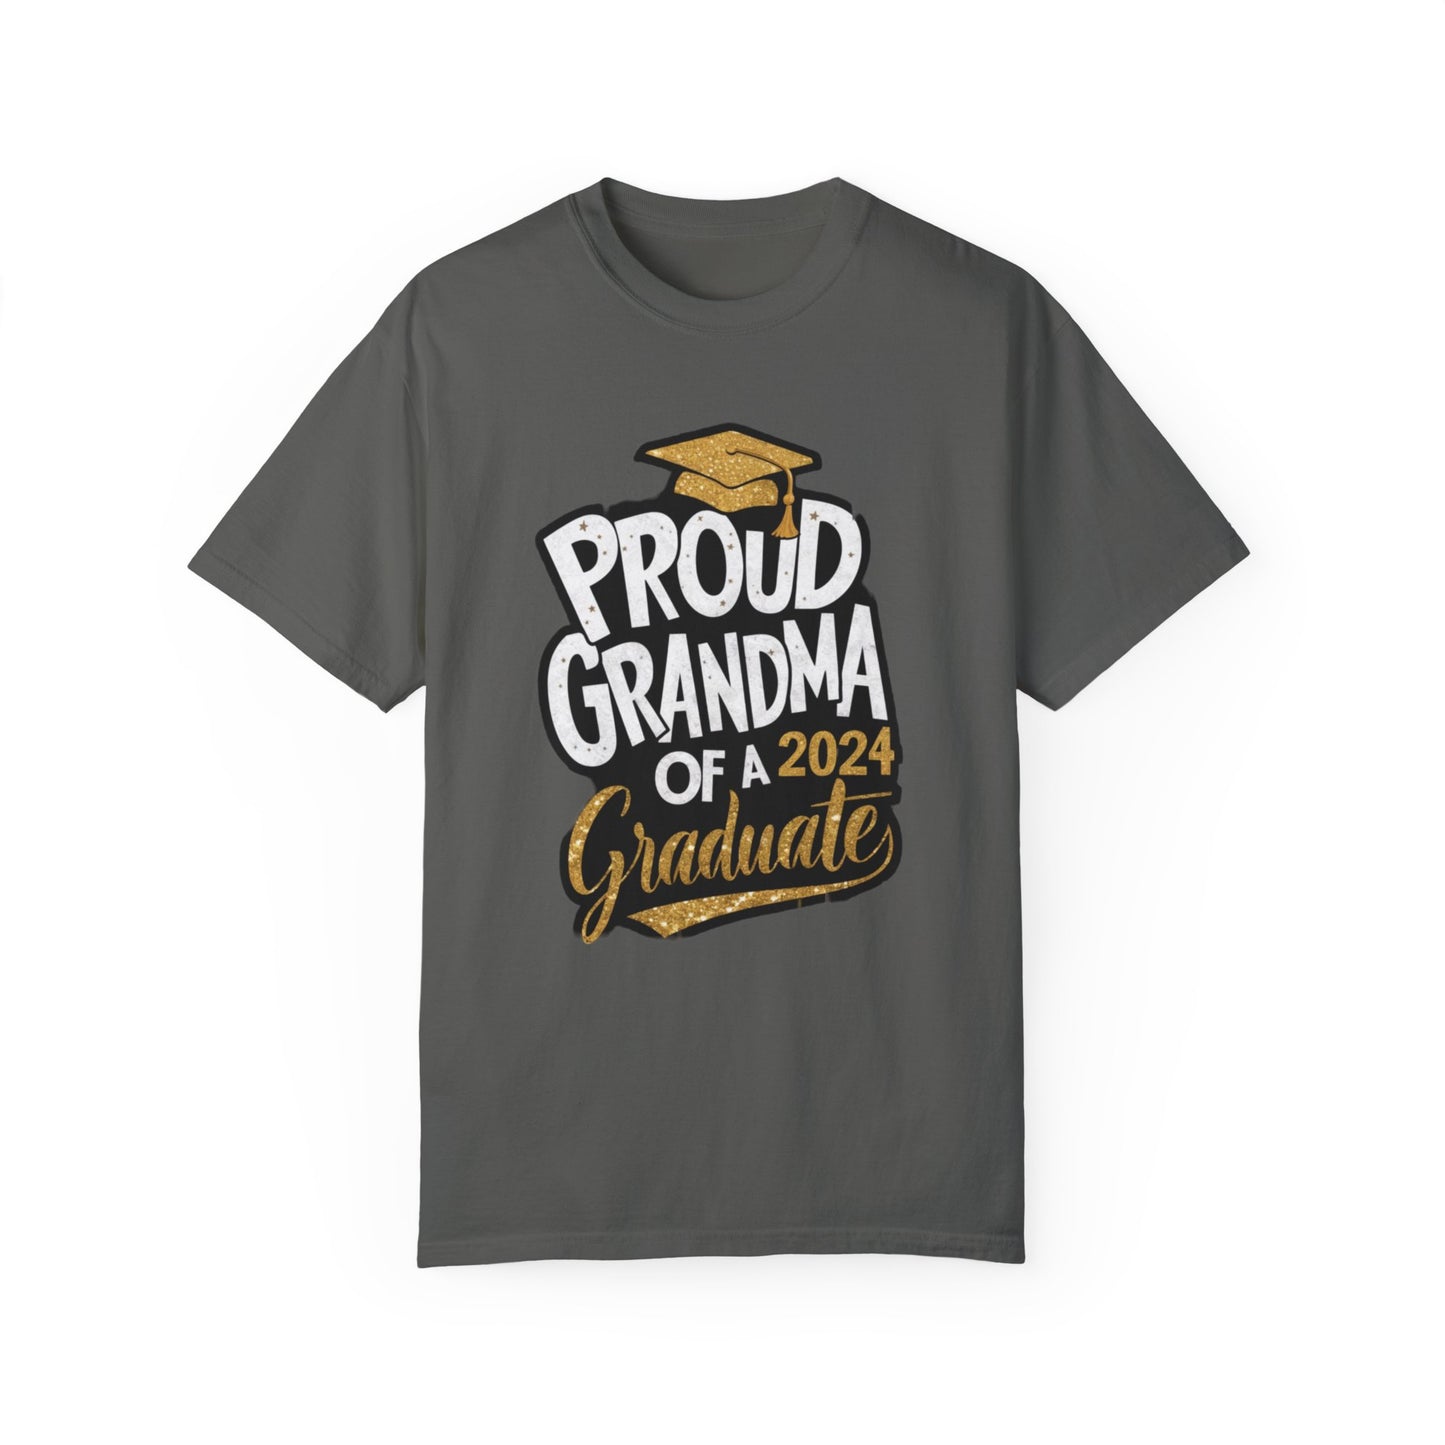 Proud of Grandma 2024 Graduate Unisex Garment-dyed T-shirt Cotton Funny Humorous Graphic Soft Premium Unisex Men Women Pepper T-shirt Birthday Gift-12